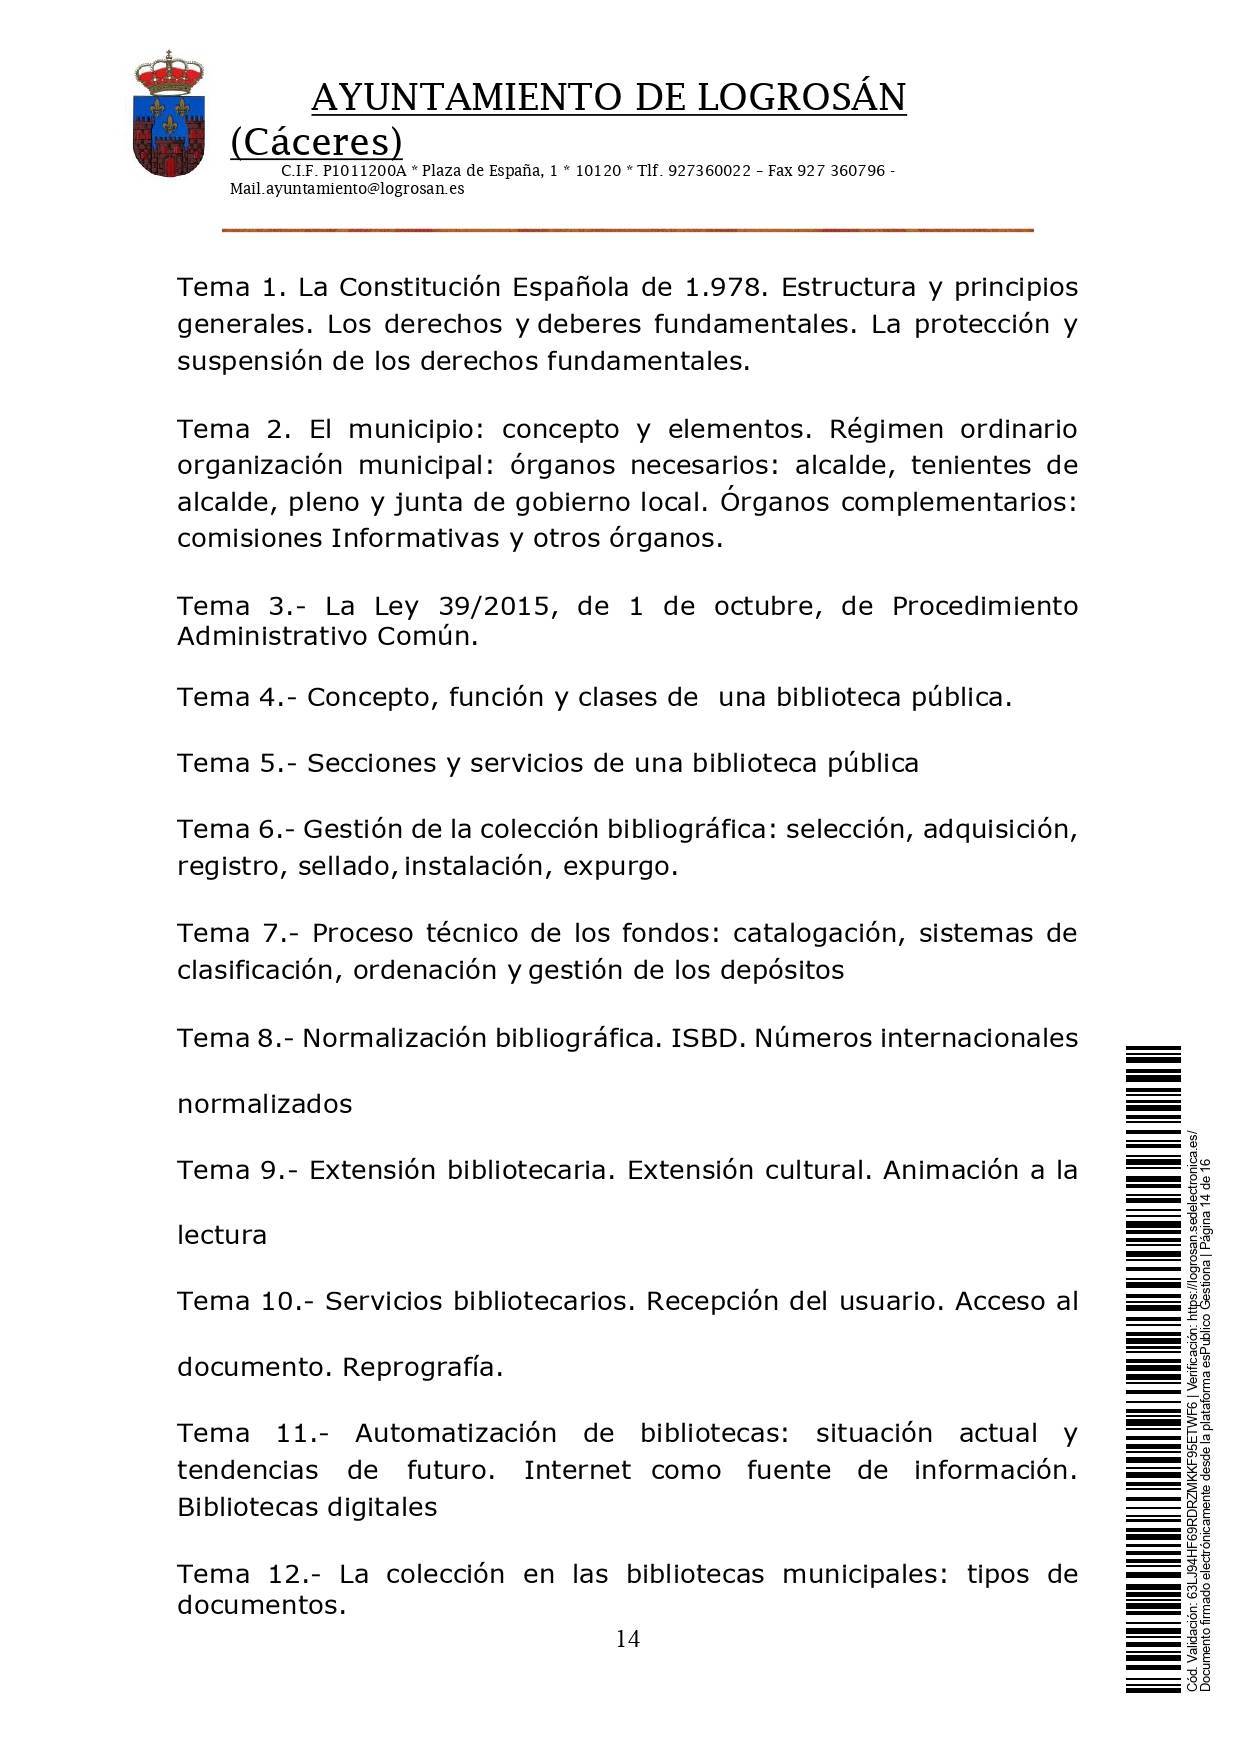 Técnicos-as auxiliar de biblioteca y dinamizador-a cultural (2021) - Logrosán (Cáceres) 14